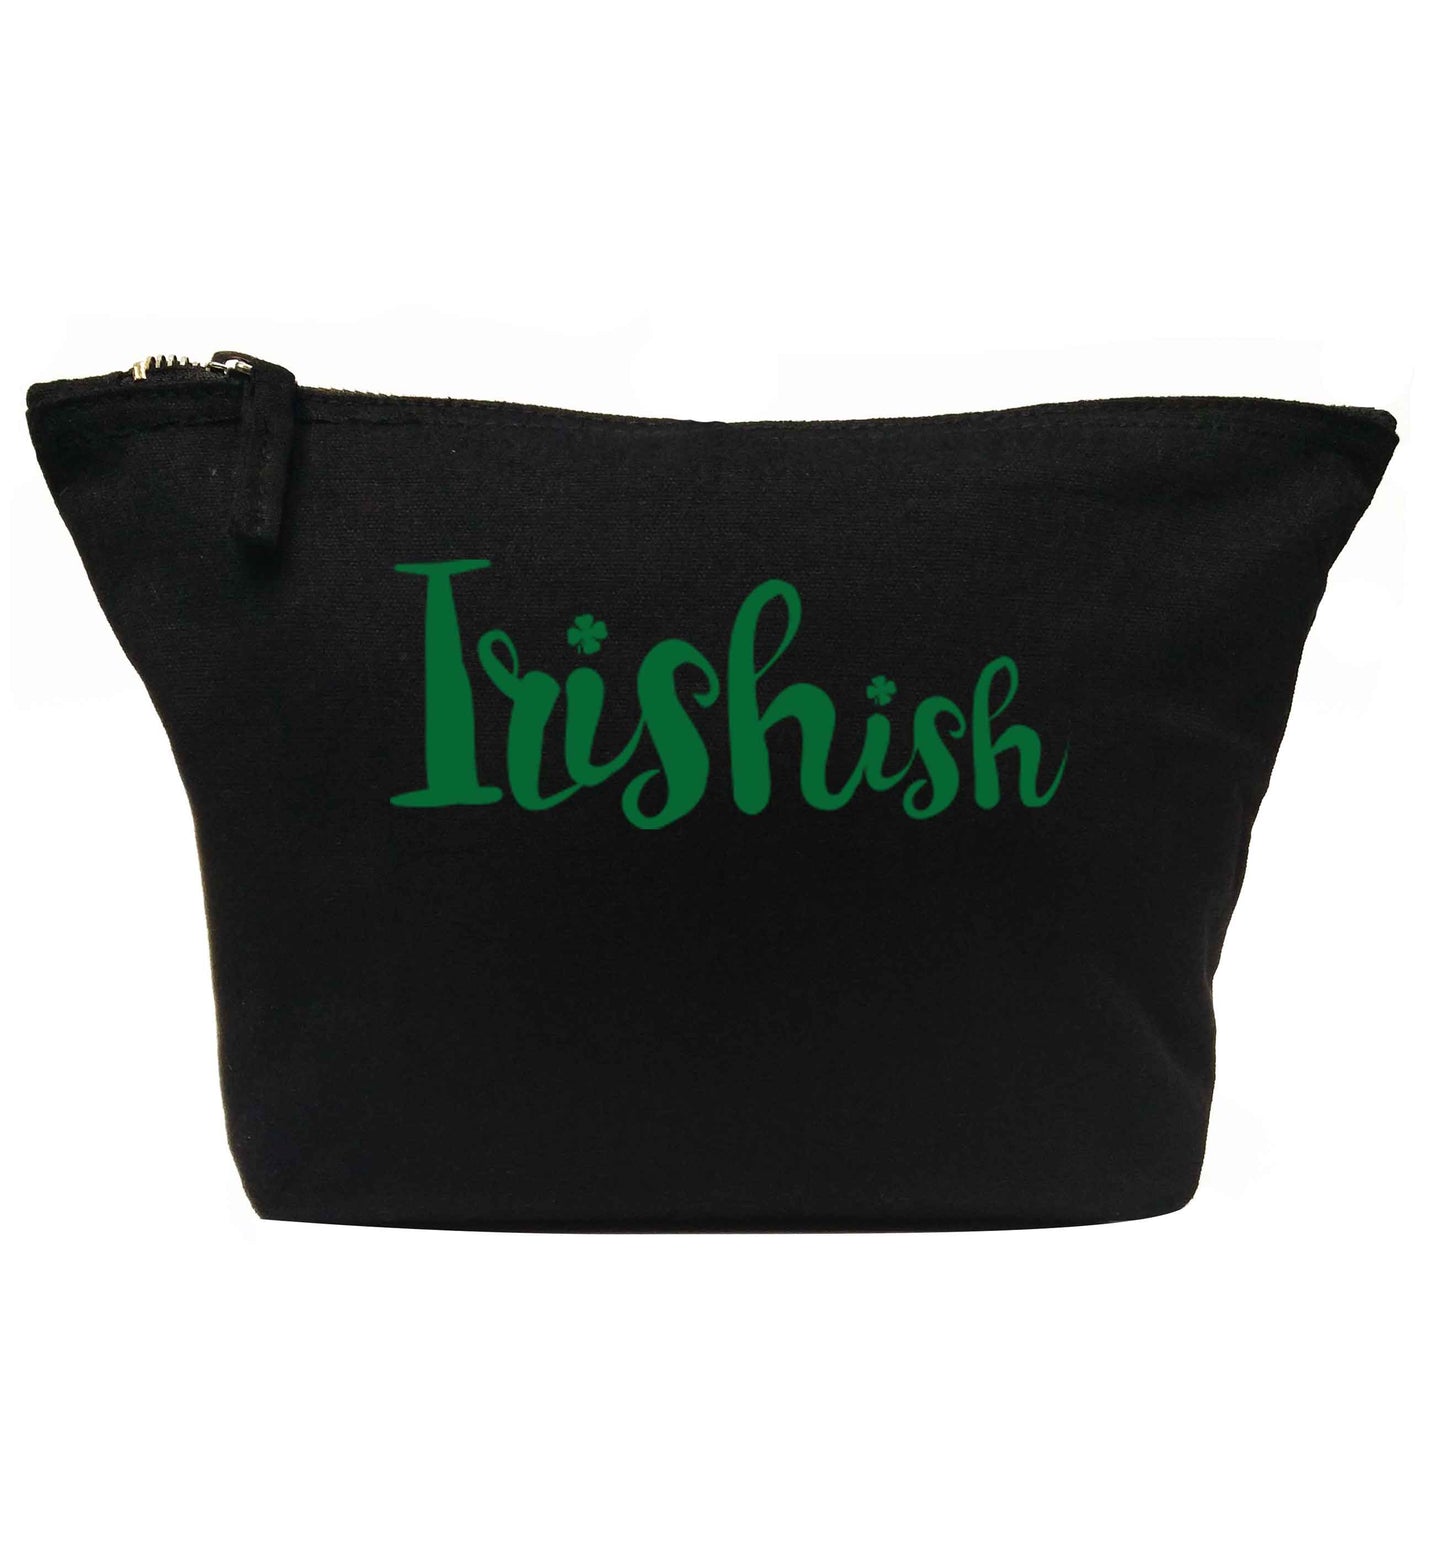 Irishish | Makeup / wash bag